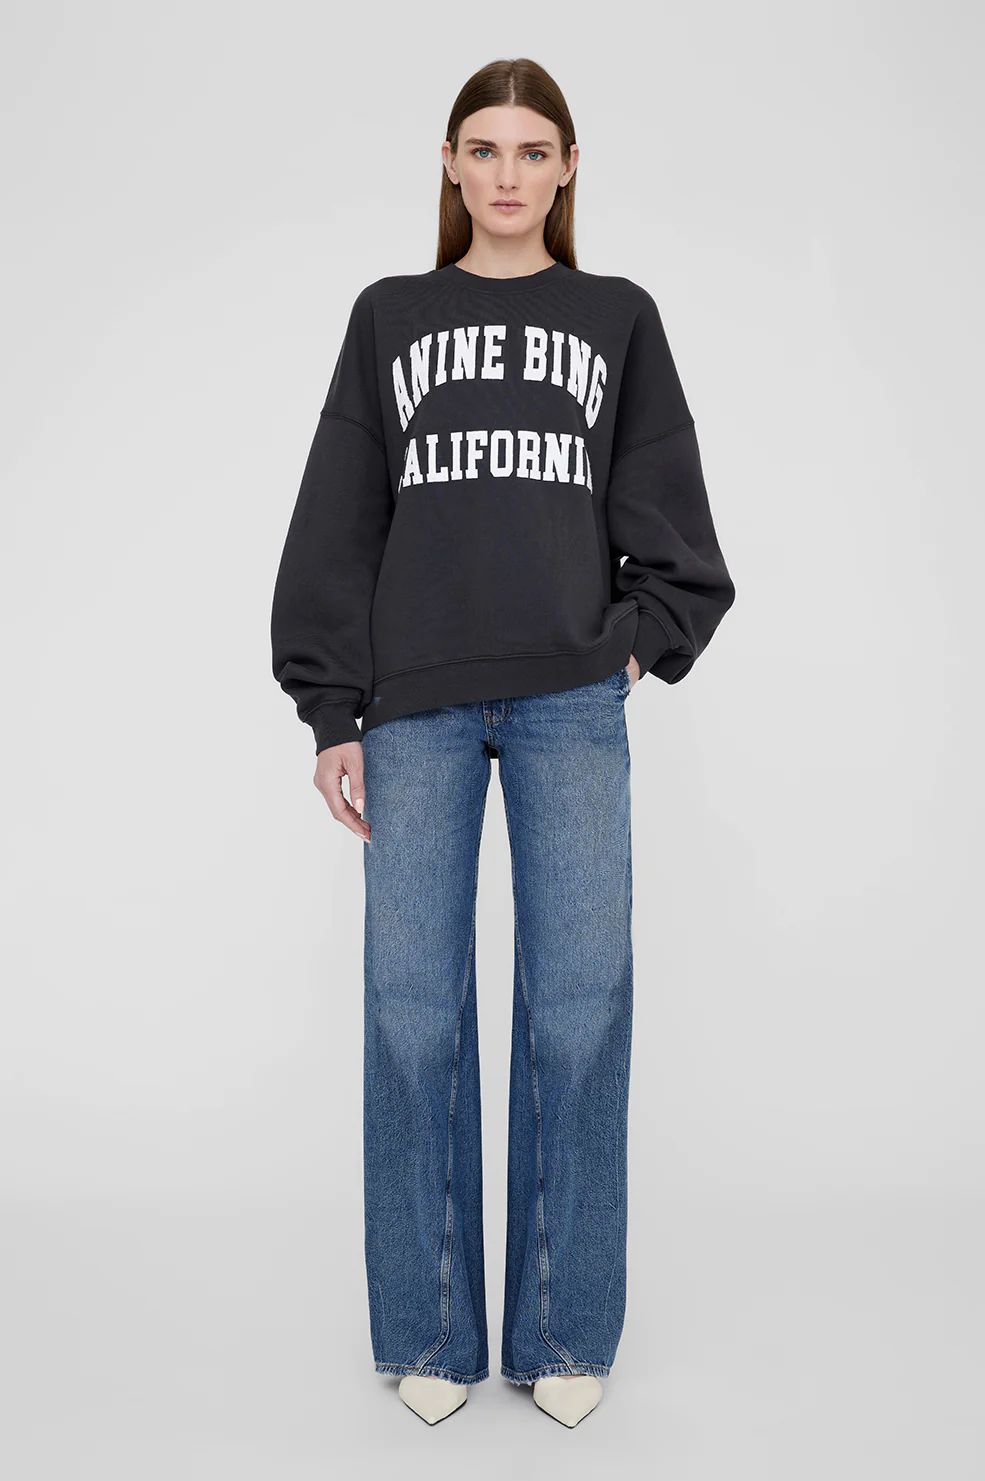 Miles Sweatshirt Anine Bing | Anine Bing